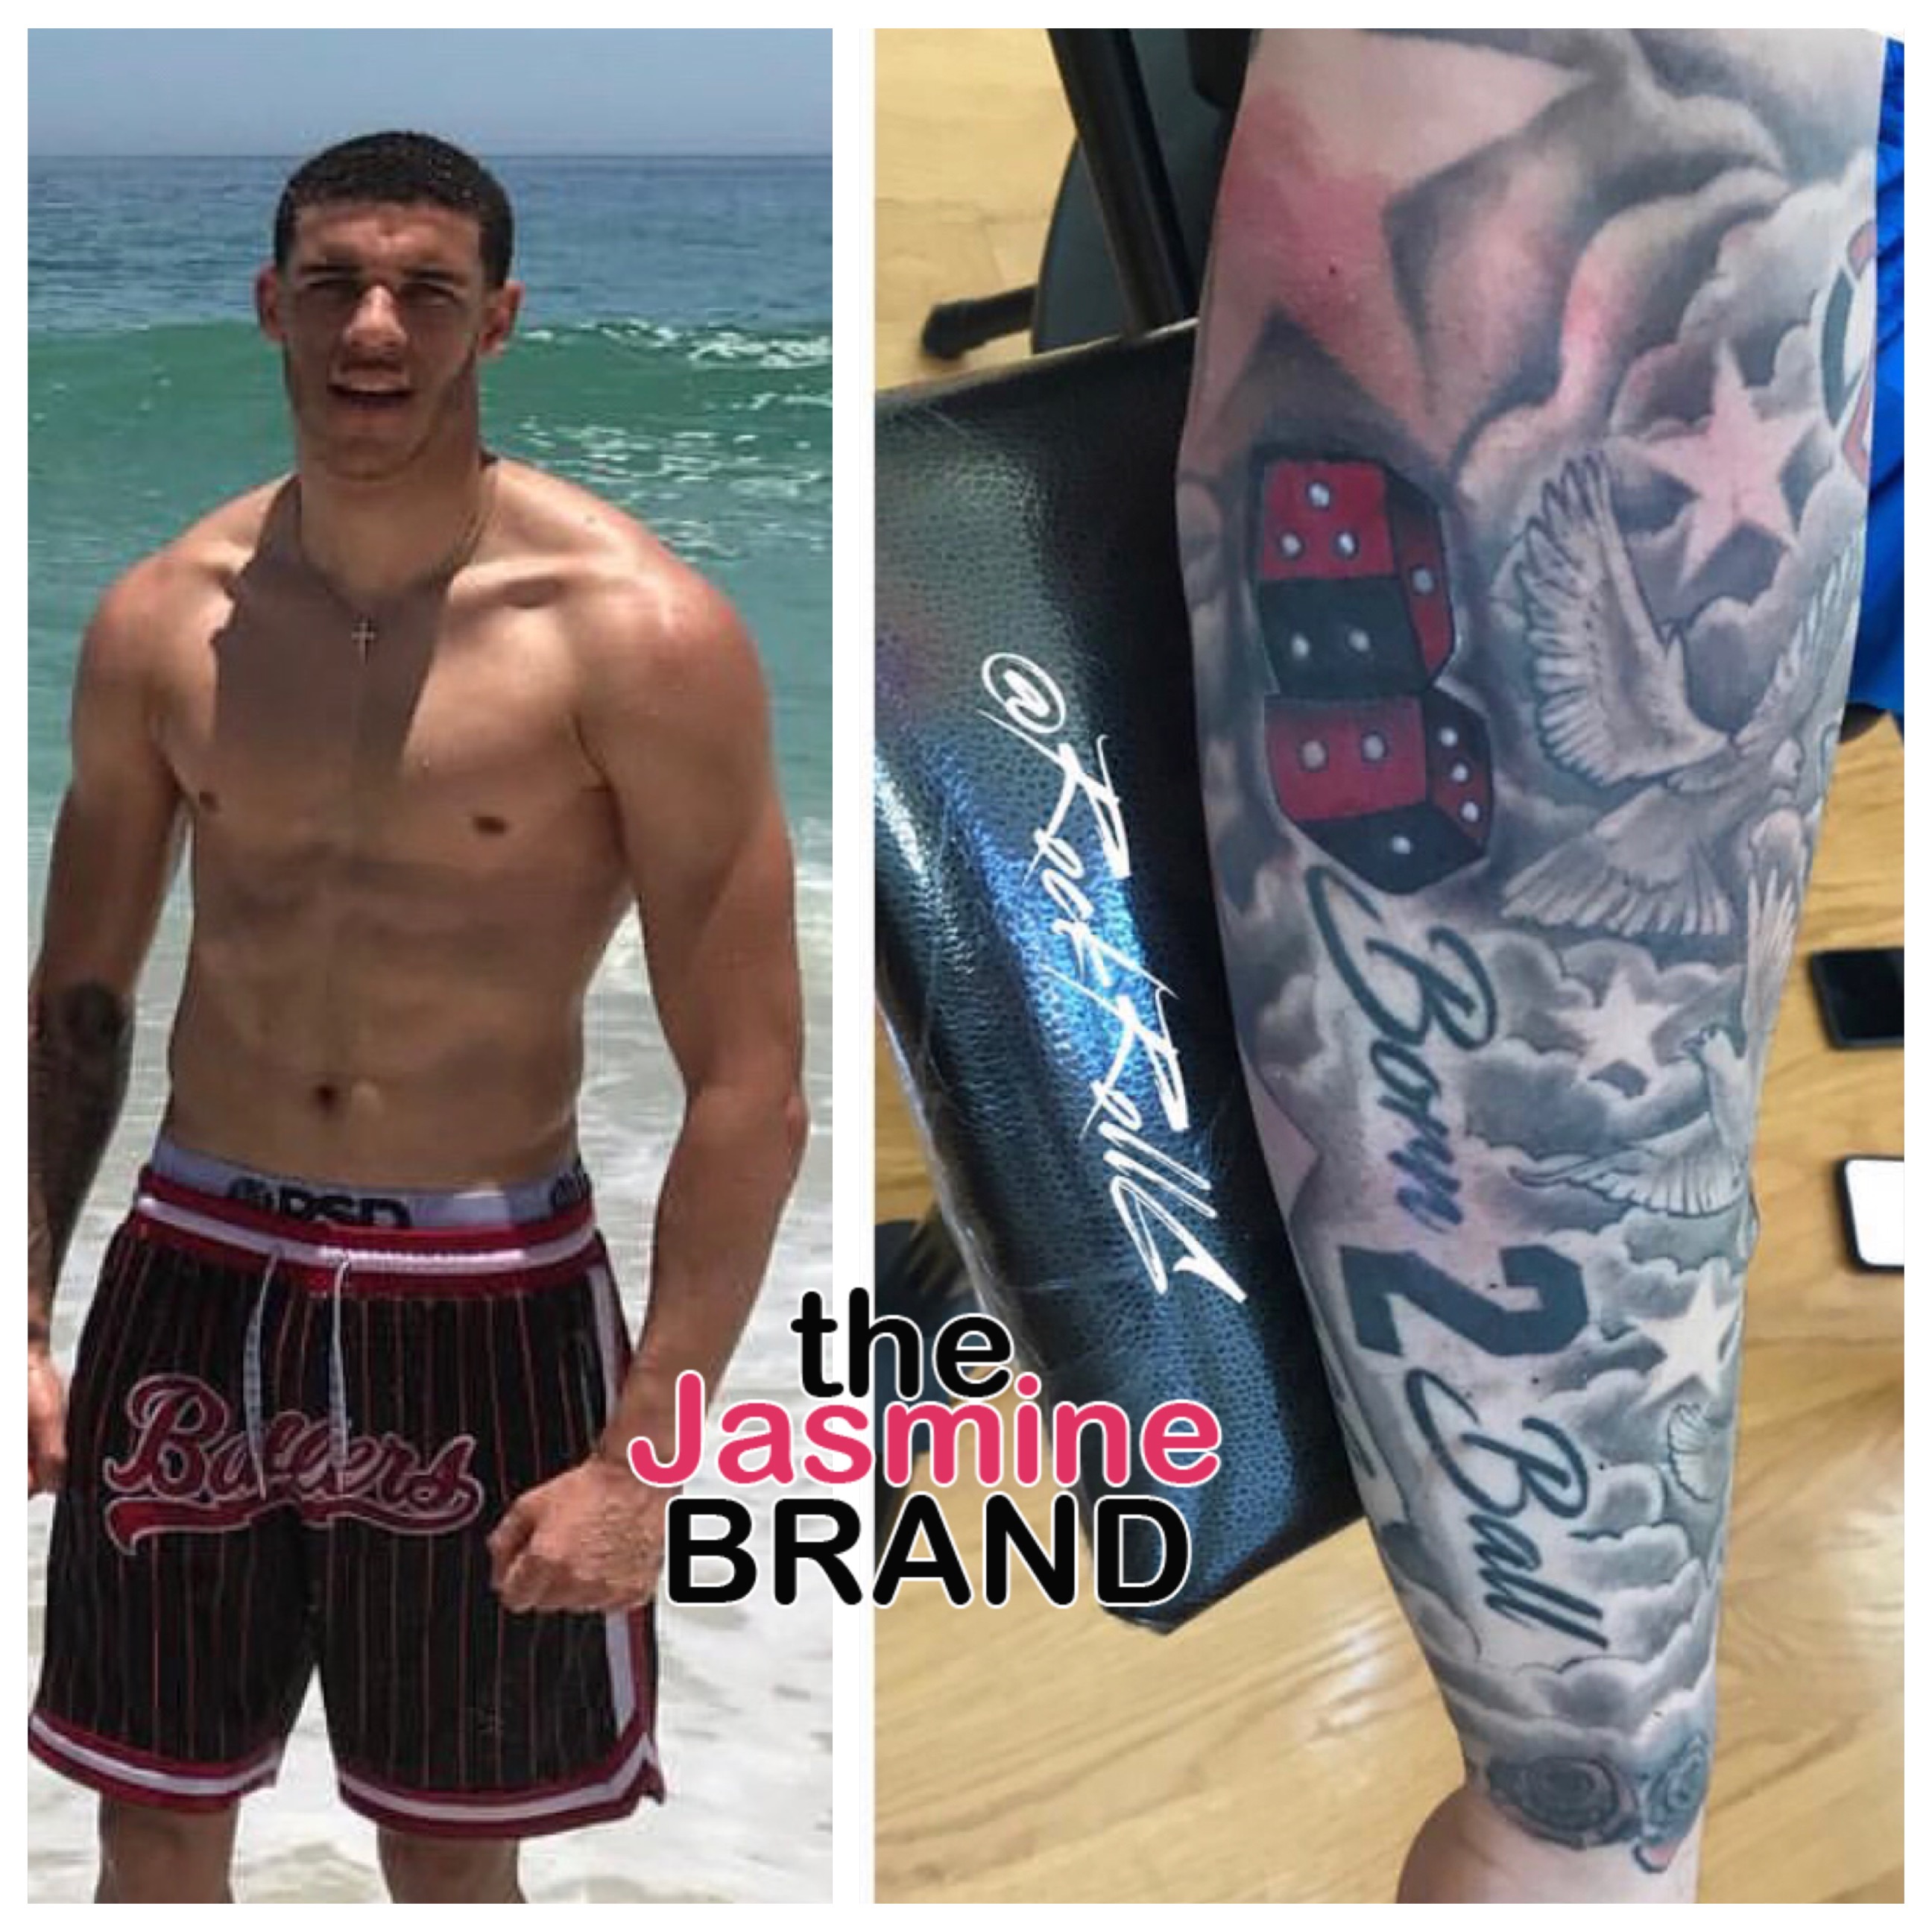 NBA makes Lonzo Ball cover up his Big Baller Brand tattoo